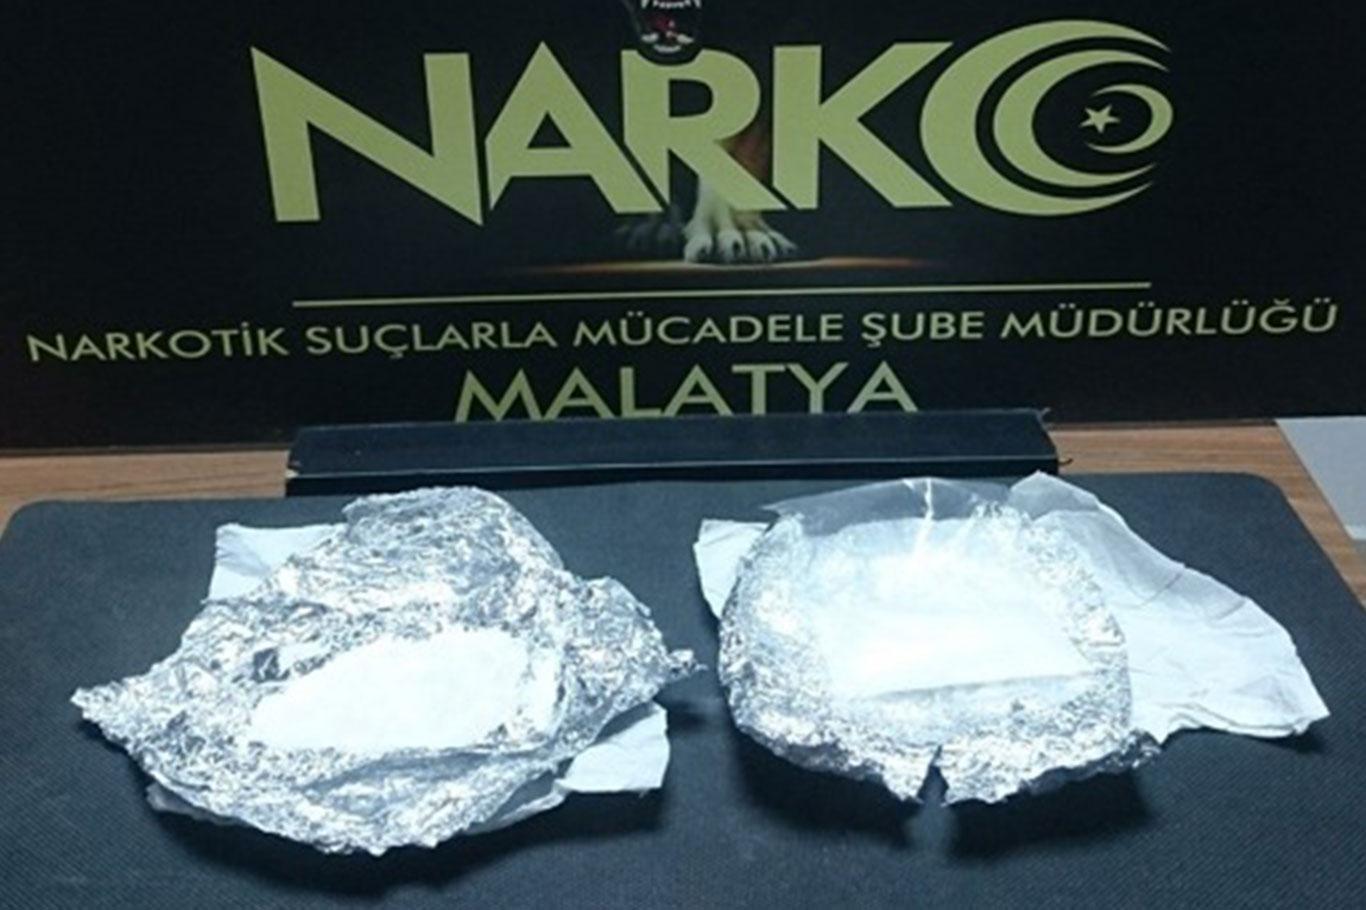 Malatya'da uyuşturucudan 2 kişi tutuklandı